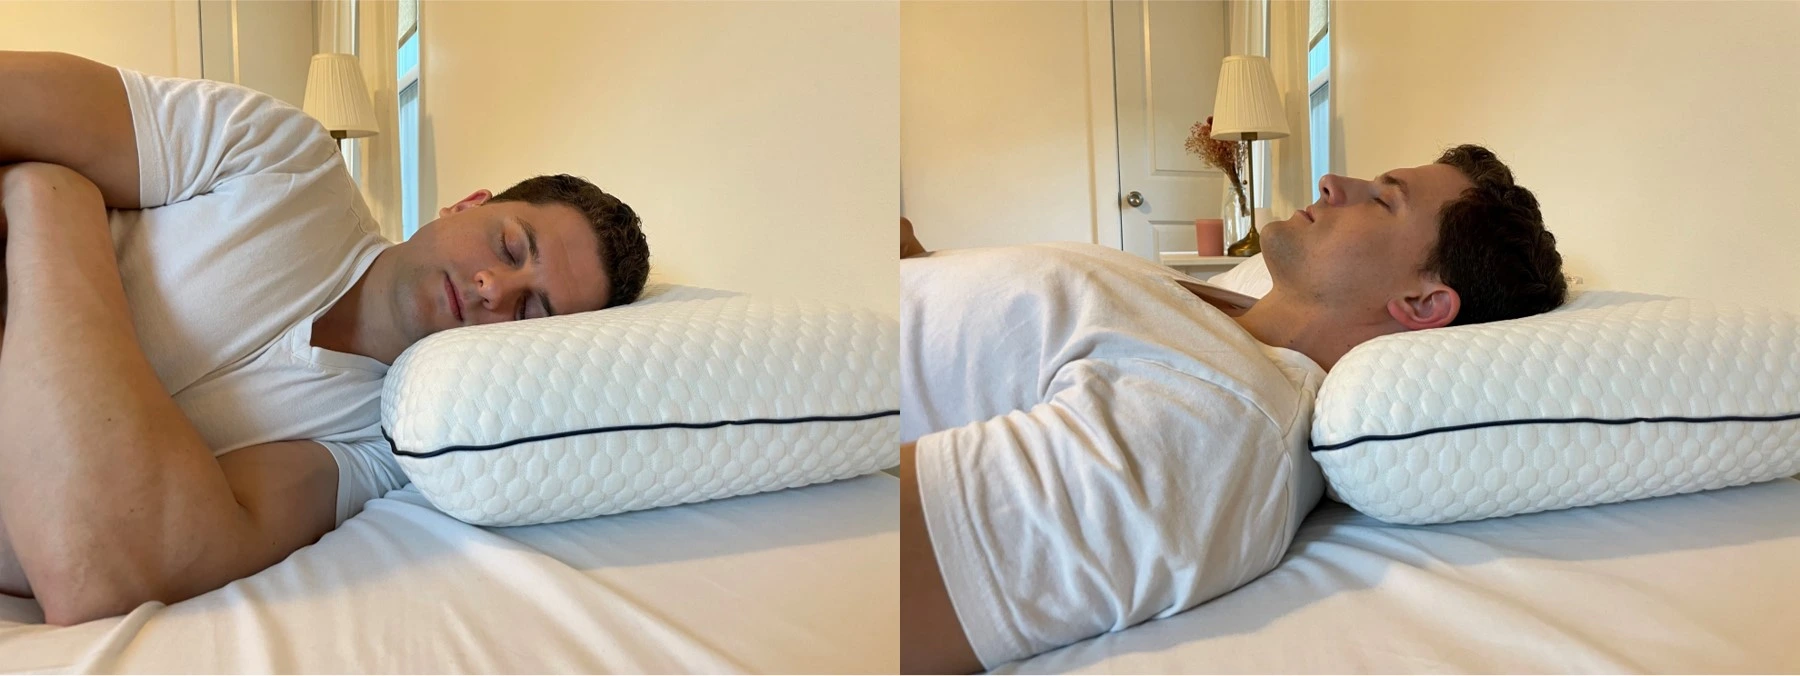 Weekender Ventilated Gel Memory Foam Pillow vs. Beckham Hotel